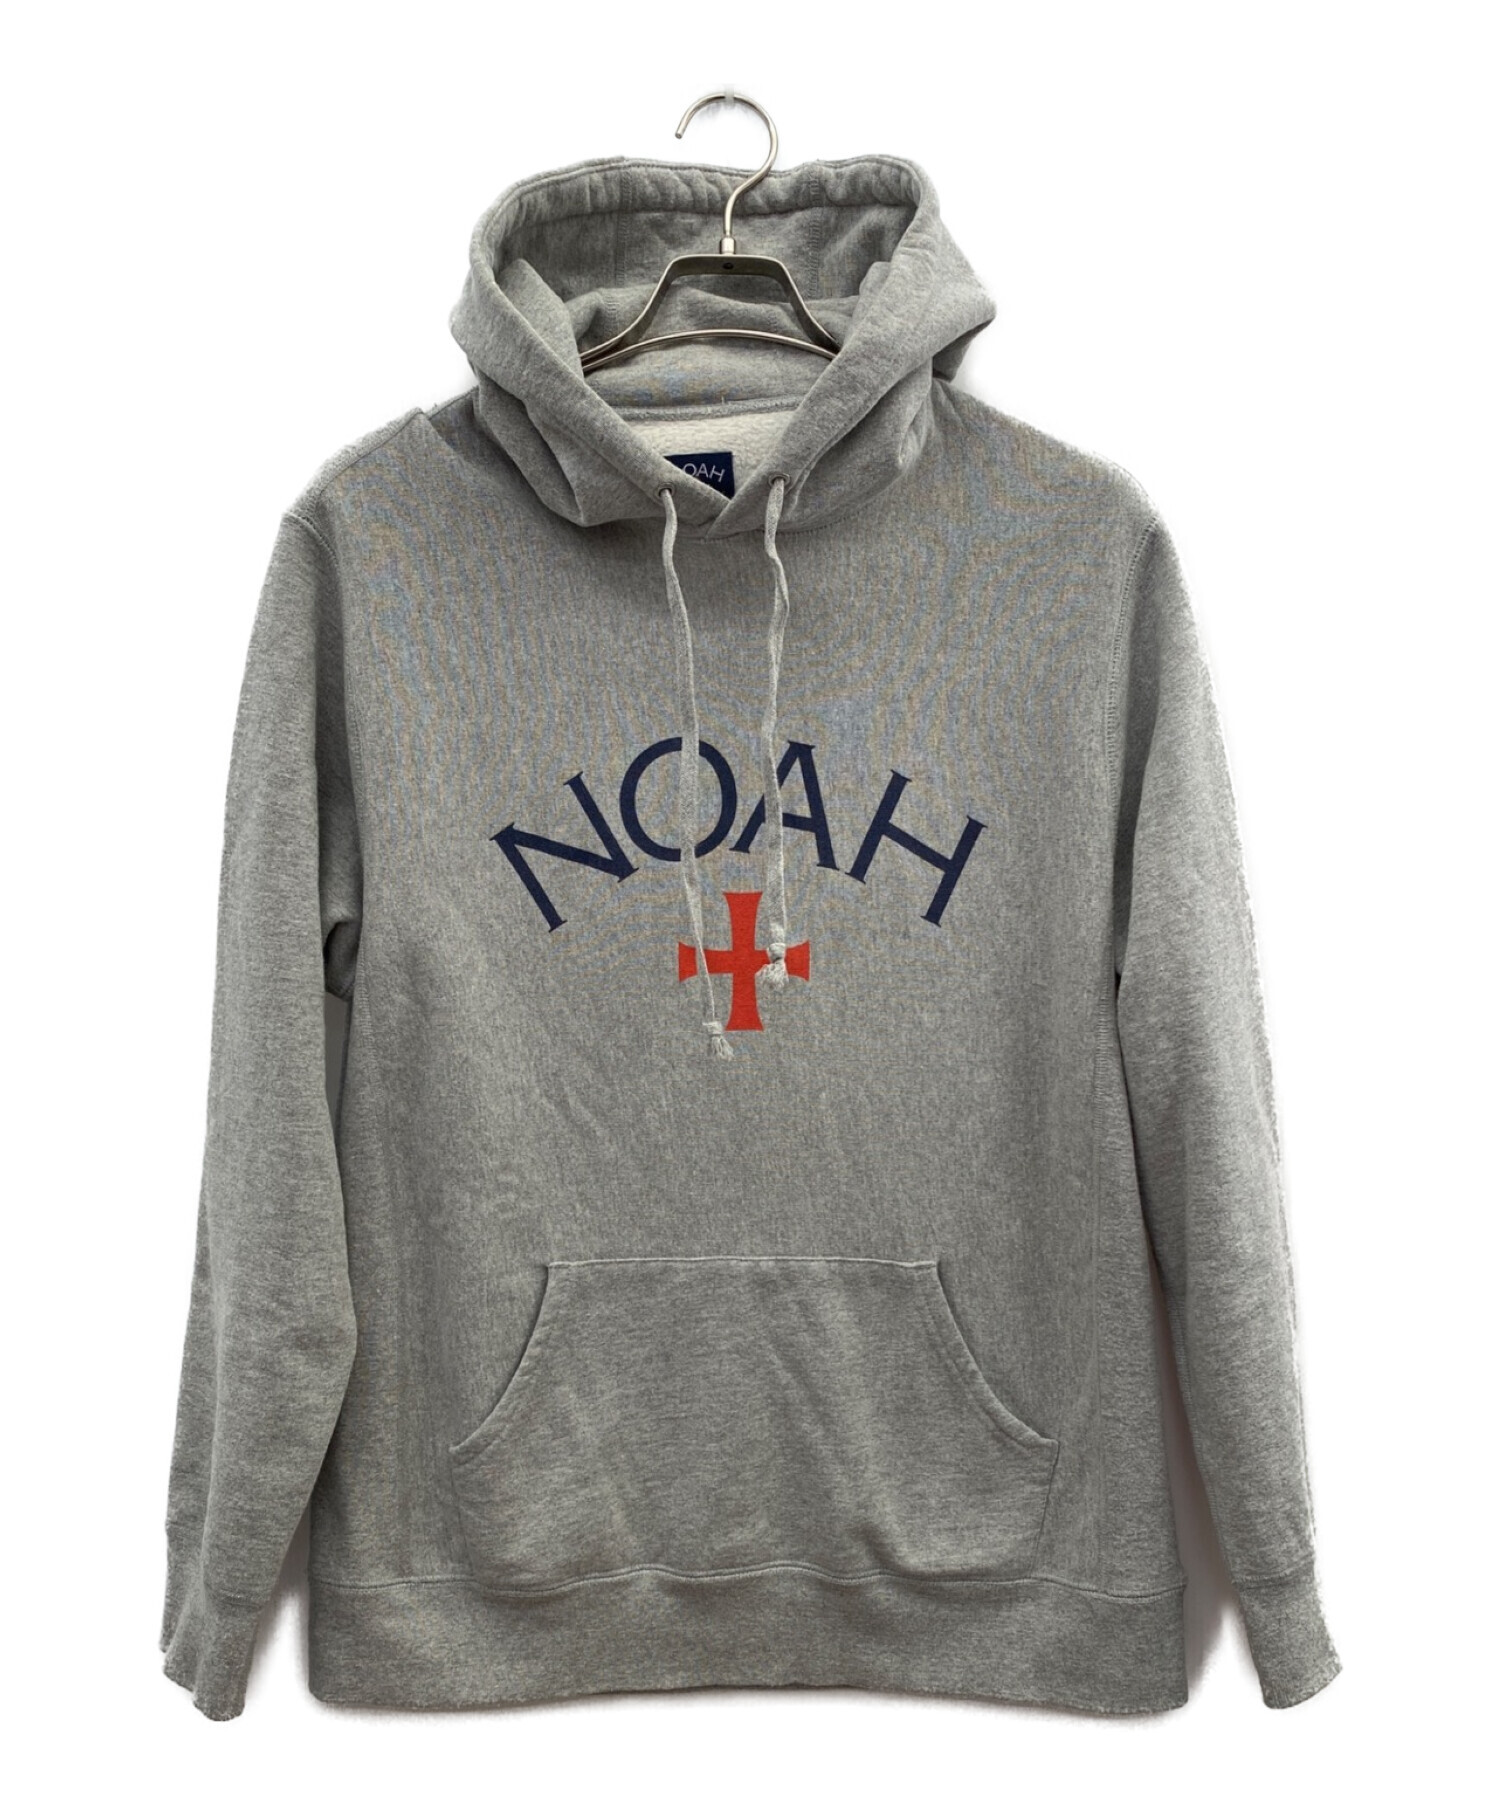 Noah (ノア) ロゴパーカー グレー サイズ:L